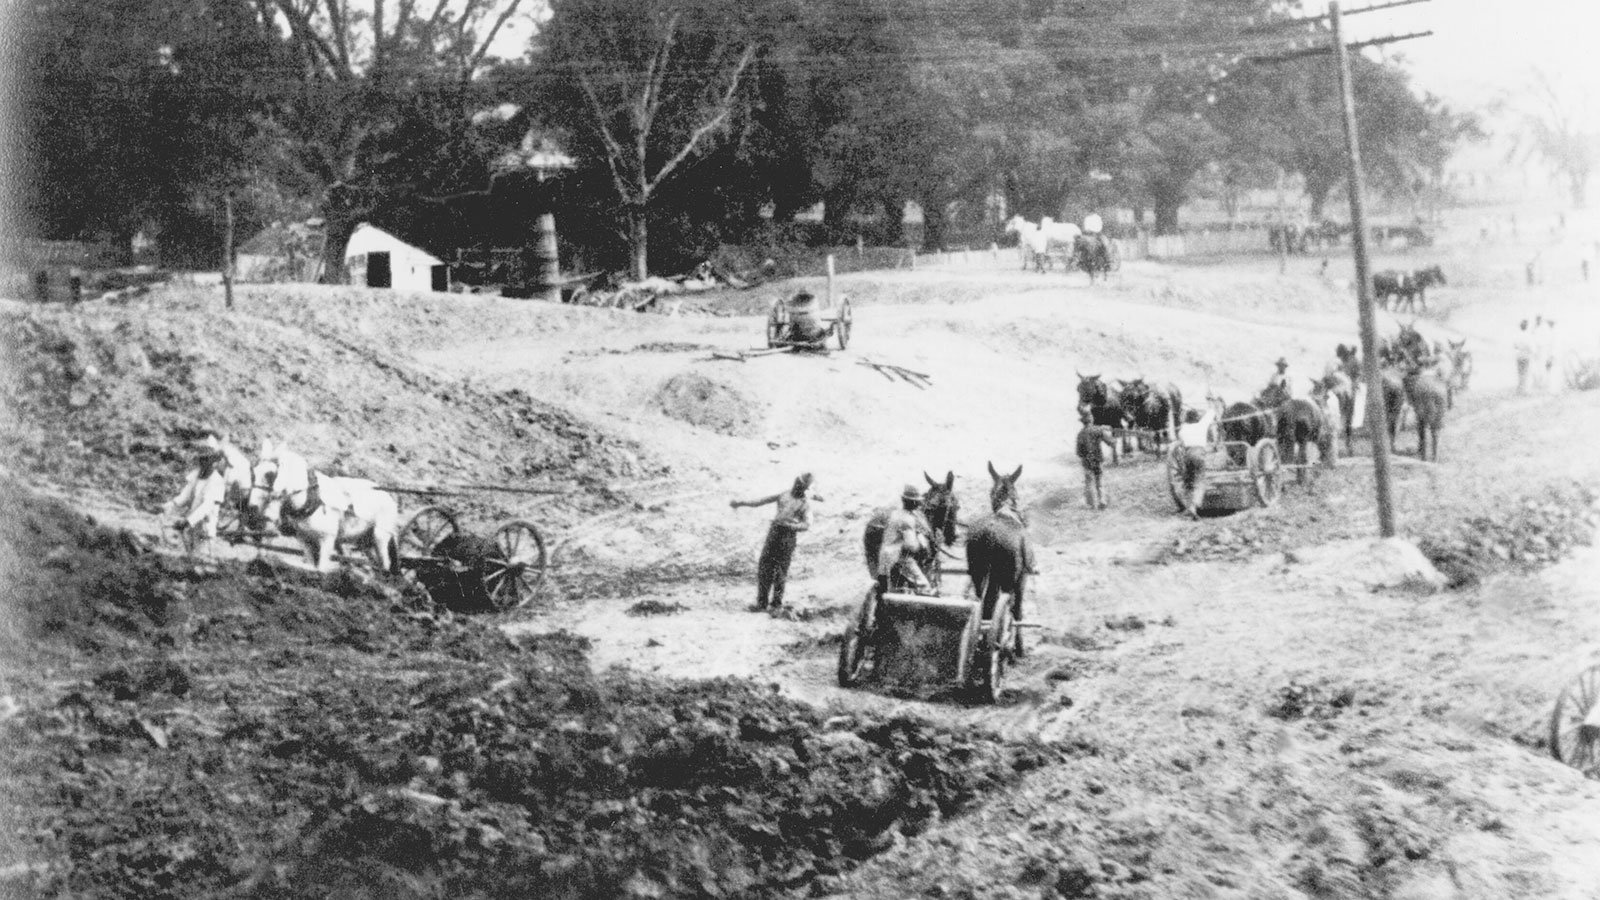 Early levee construction in Louisiana, circa 1880